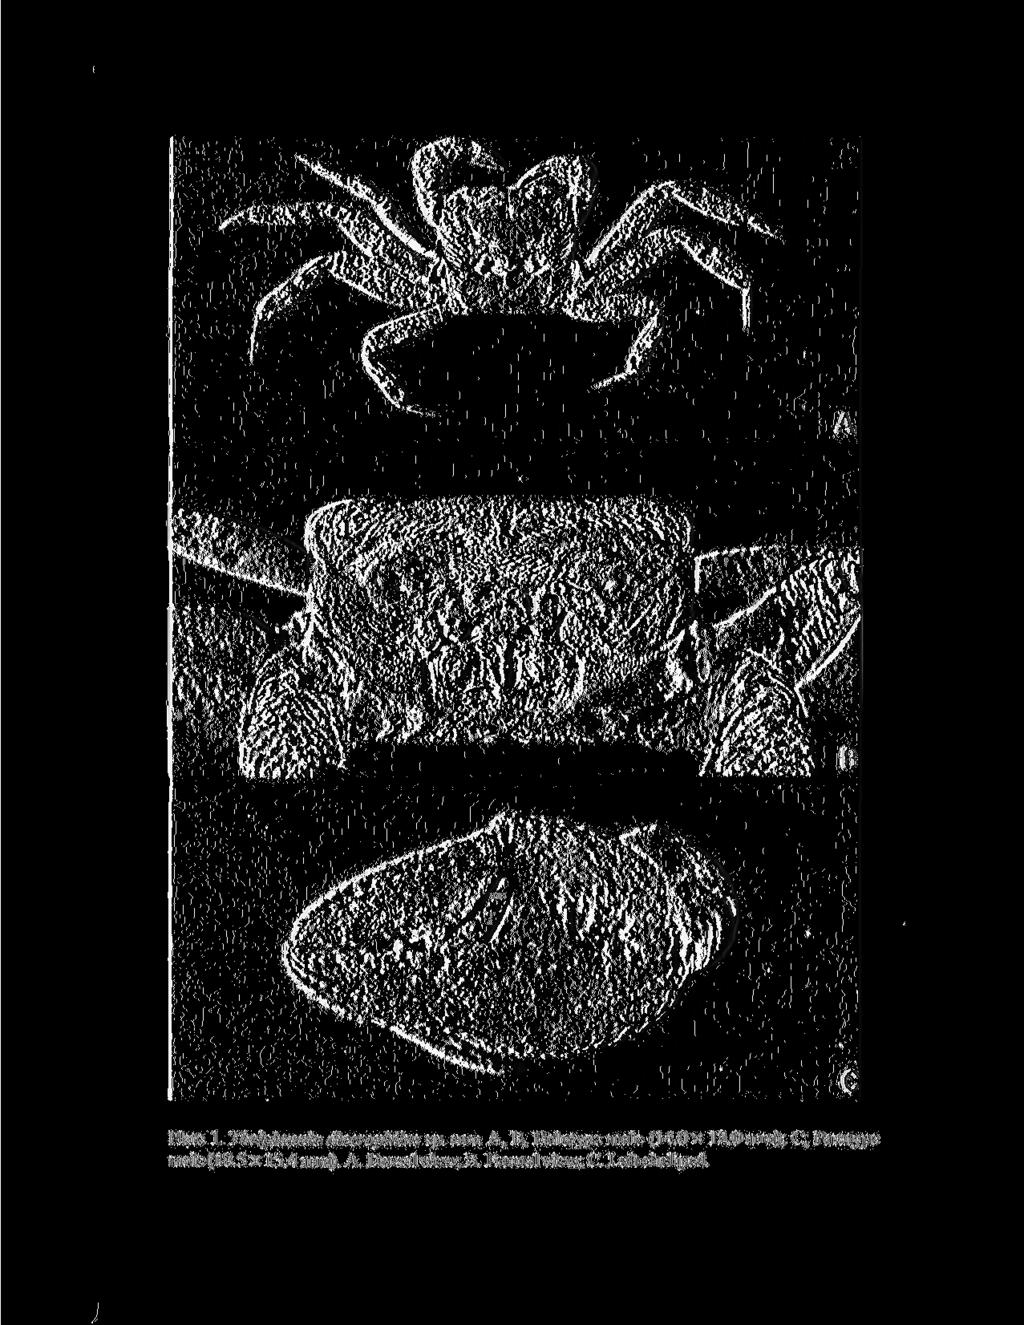 Plate 1. Thelphusula dicerophilus sp. nov. A, B, Holotype male (14.0 x 12.